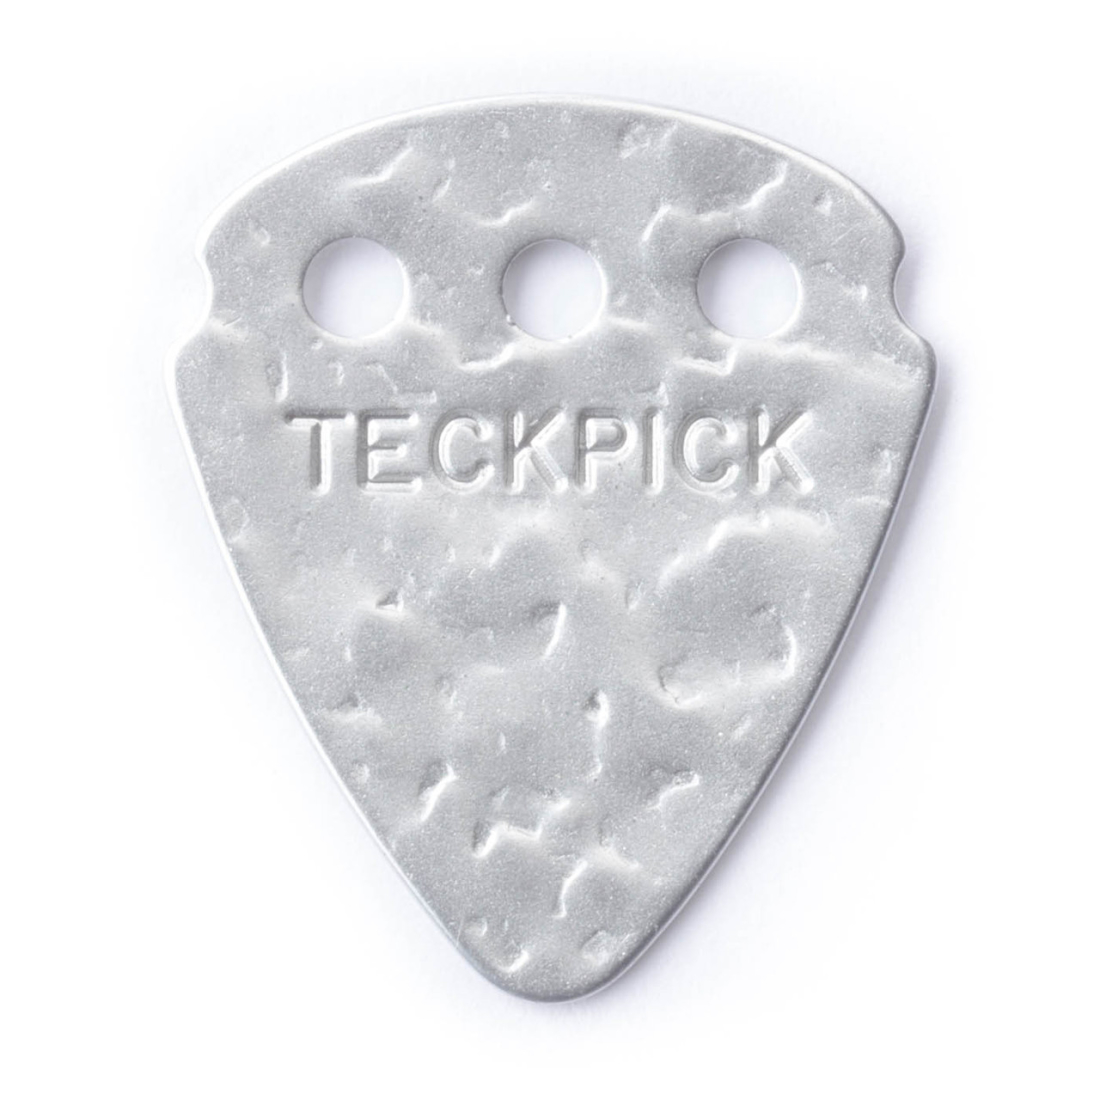 TECKPICK Players Pack (12 Pack) - Textured